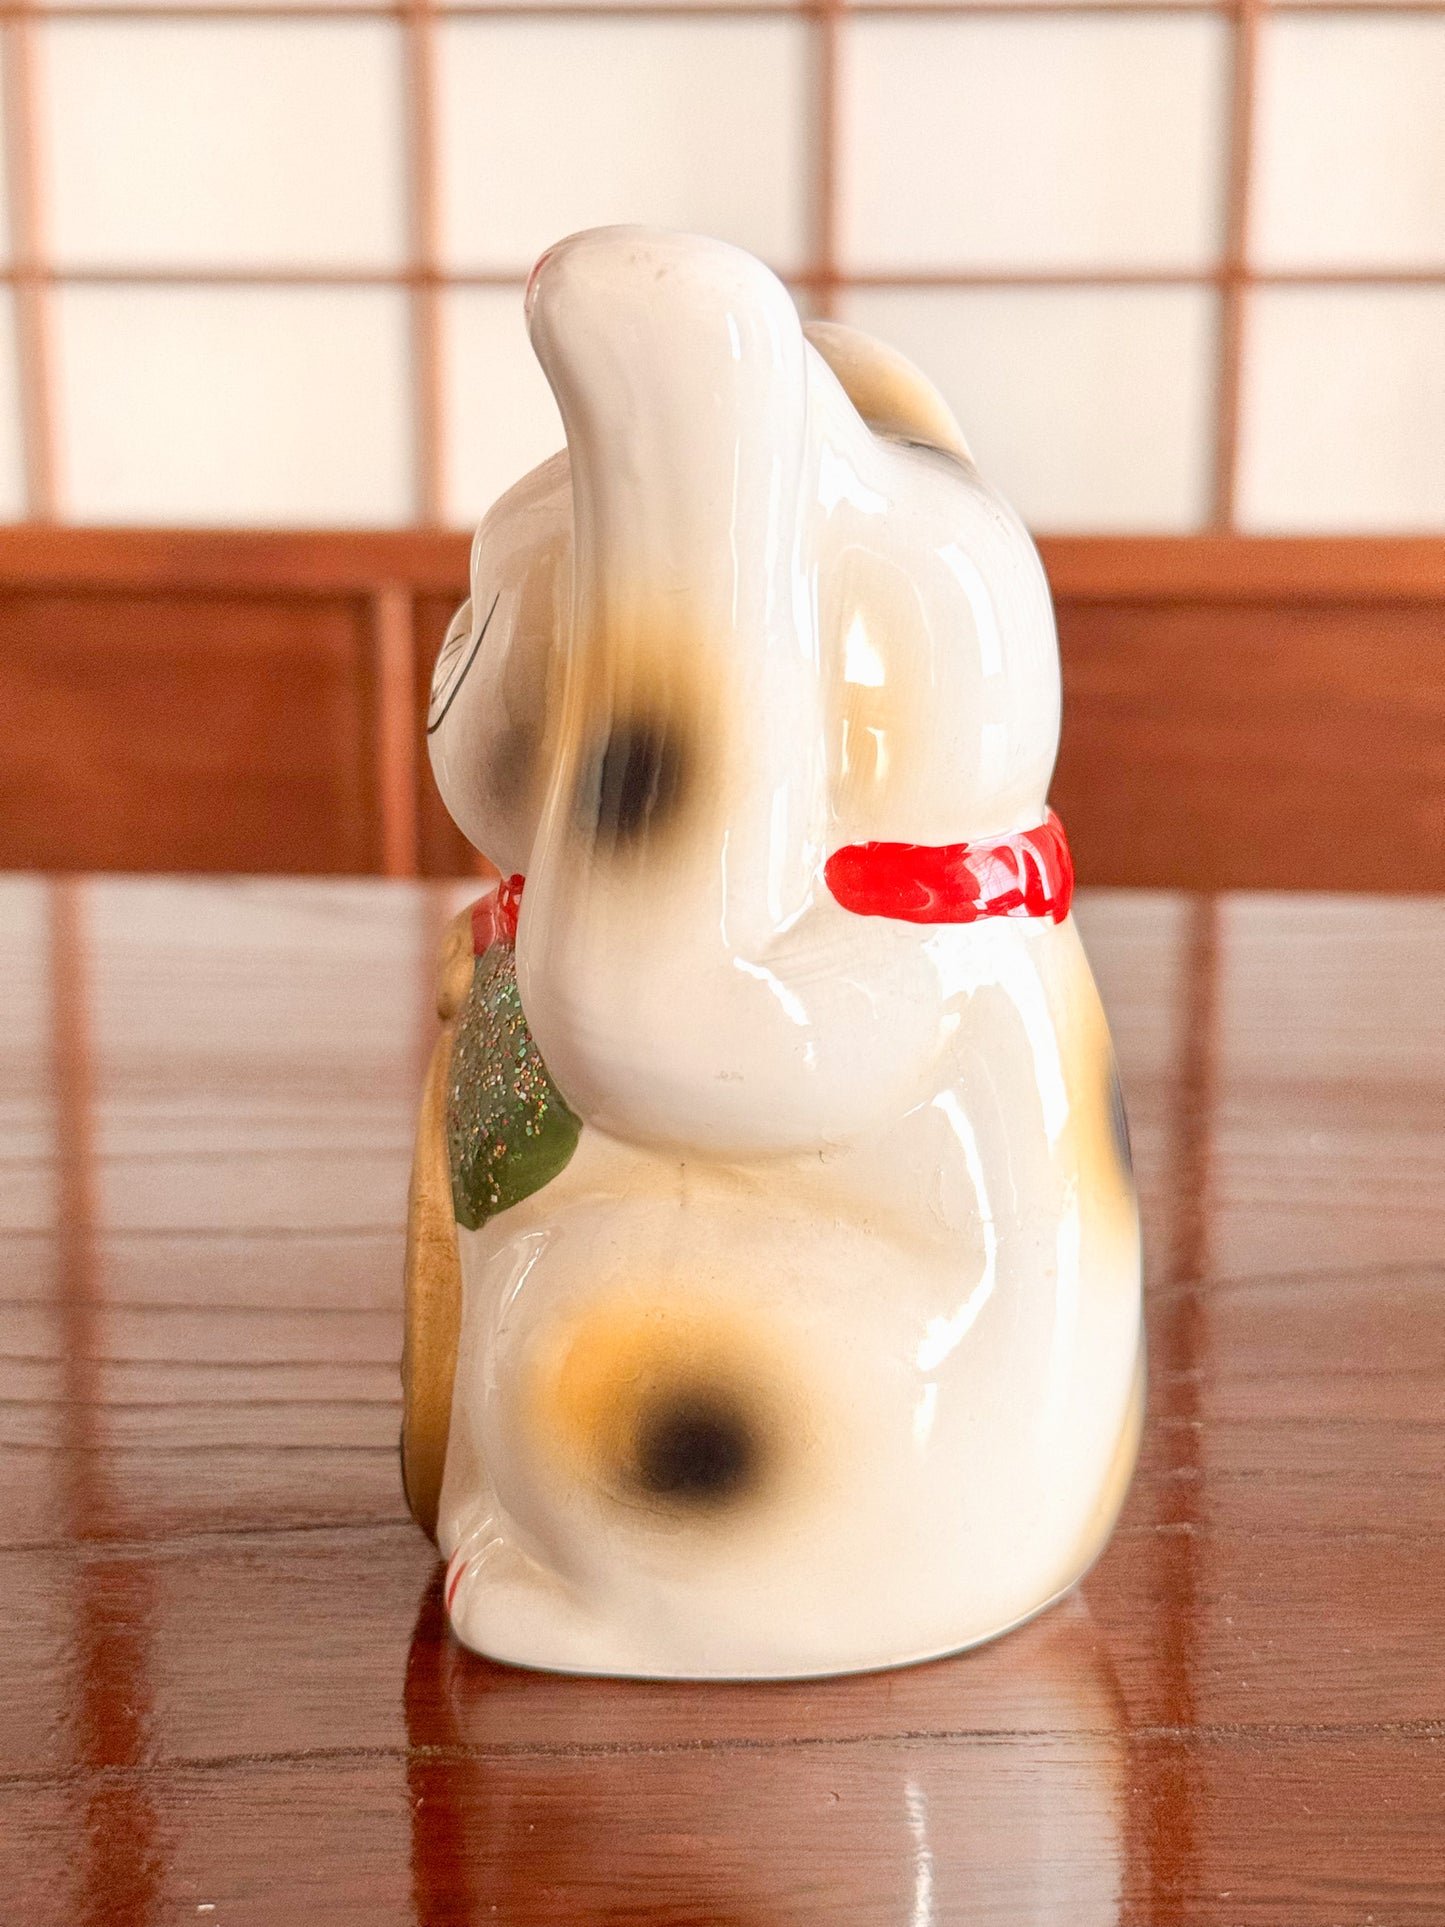 Maneki neko ceramique patte gauche levee profil